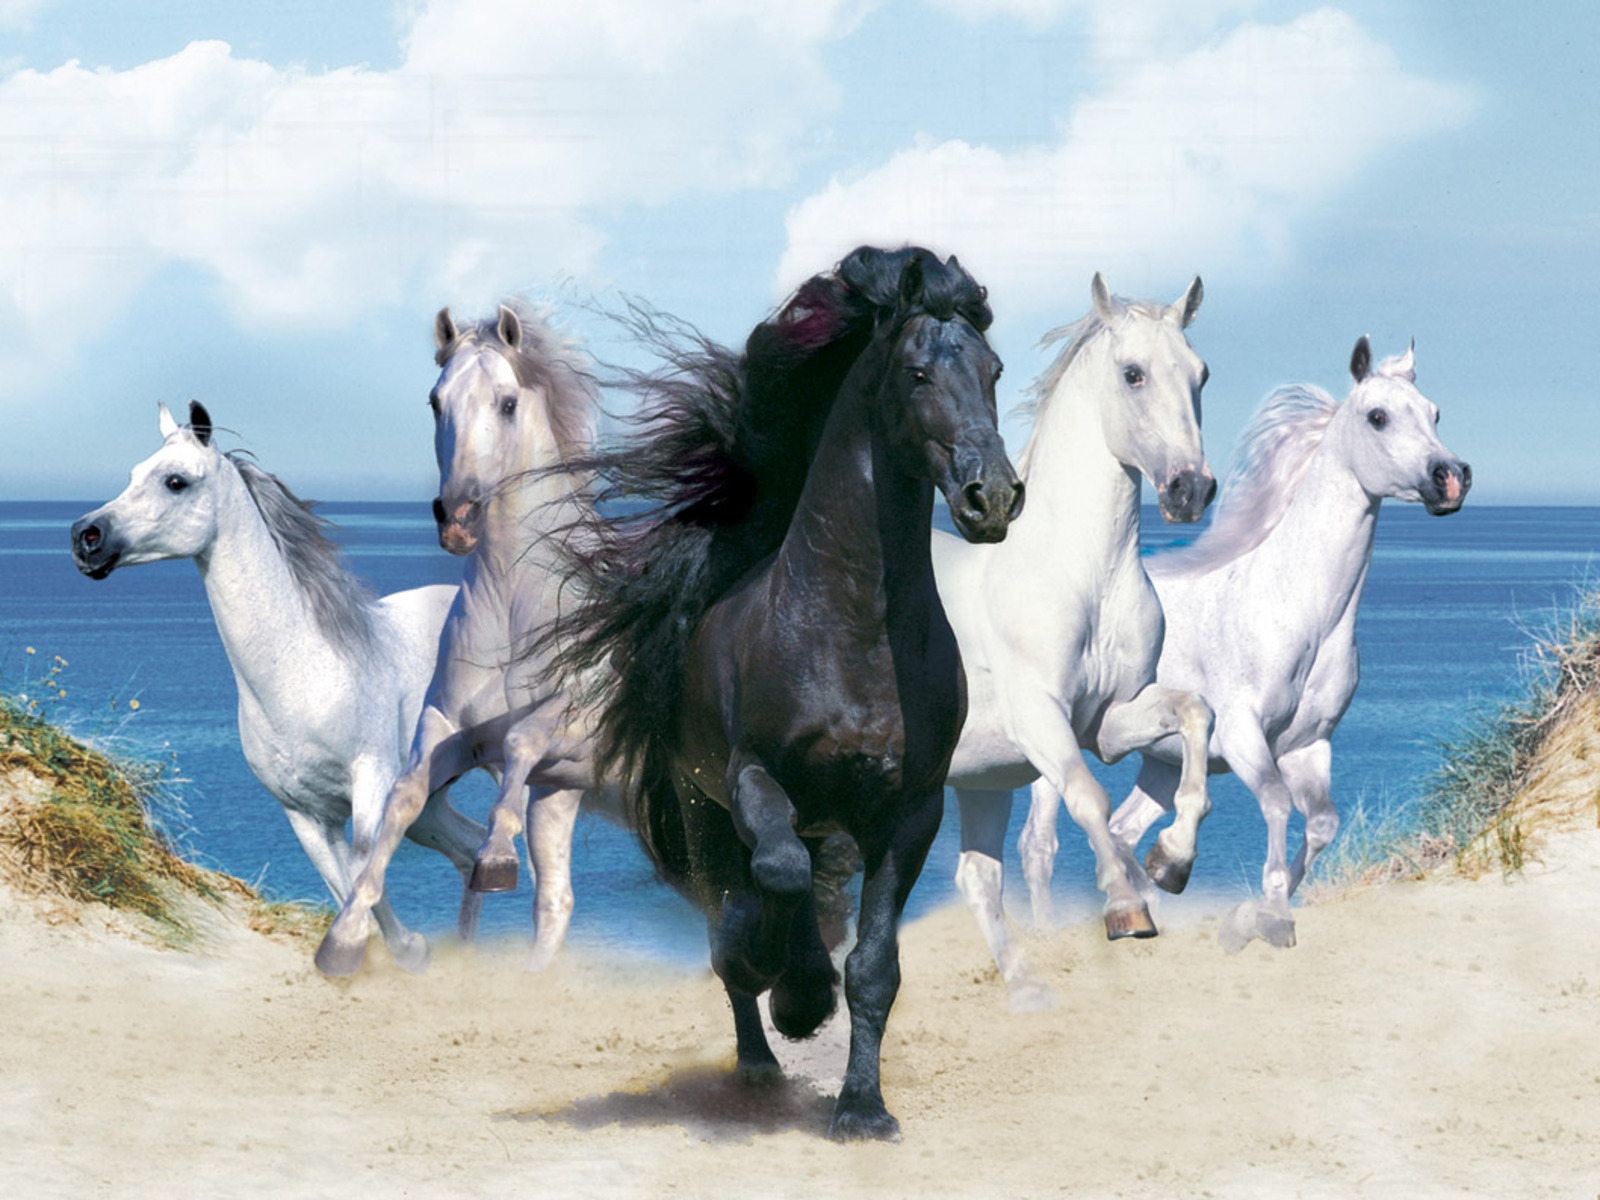 http://4.bp.blogspot.com/-AUY3oodb4yE/T4DA27QSG5I/AAAAAAAAKFs/SXdk96AIJVI/s1600/Animals+Wallpapers+Fantasy+Beautiful+Horses.jpg